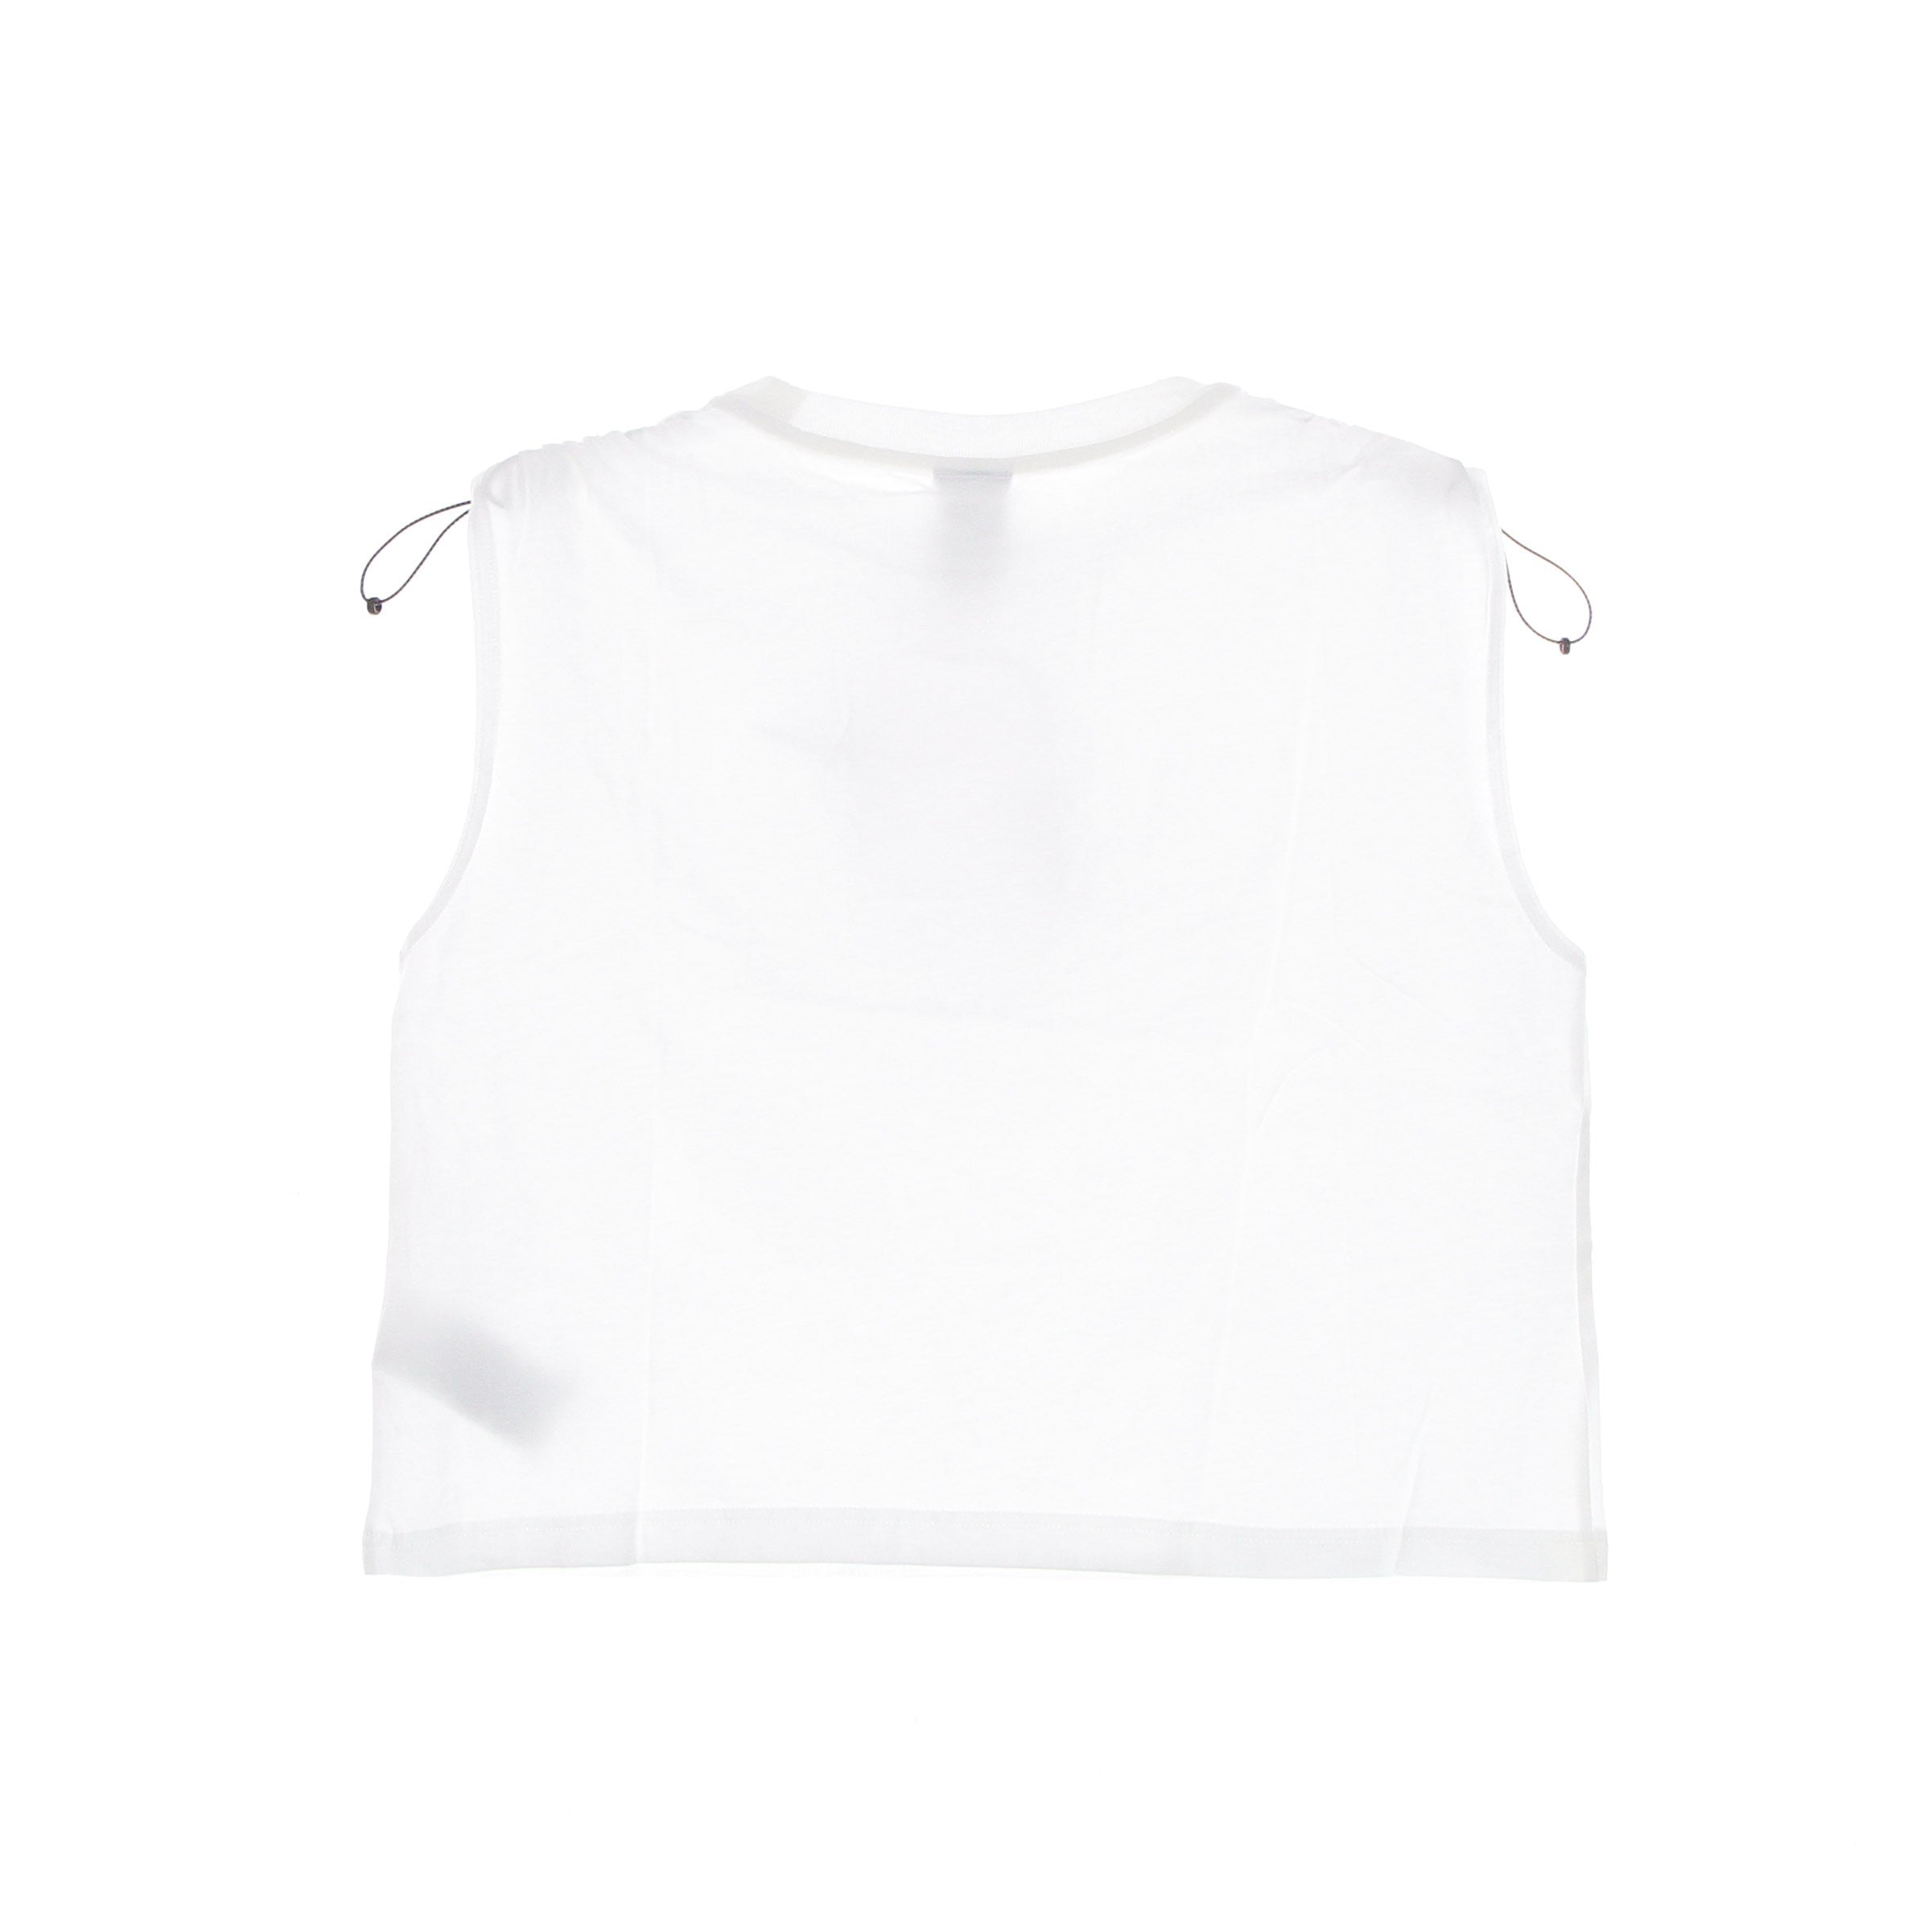 Women's Sportswear Essential Dri-fit Tank Top White/black